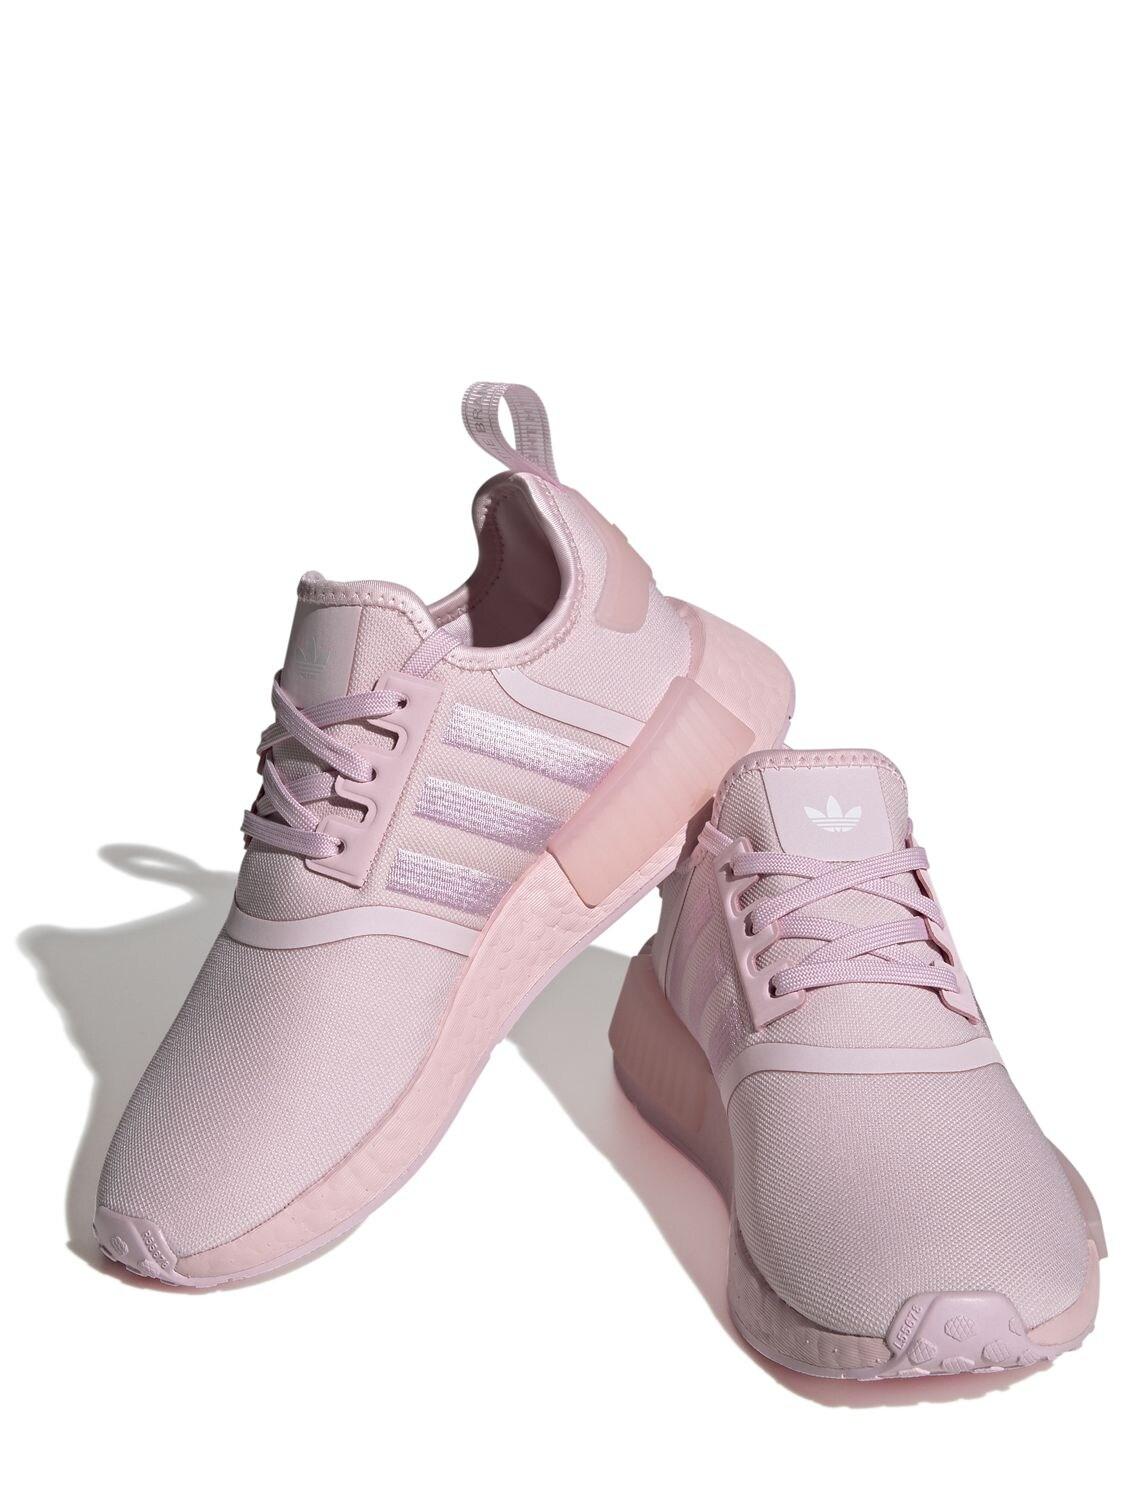 adidas Originals Nmd R1 Sneakers in Pink | Lyst UK